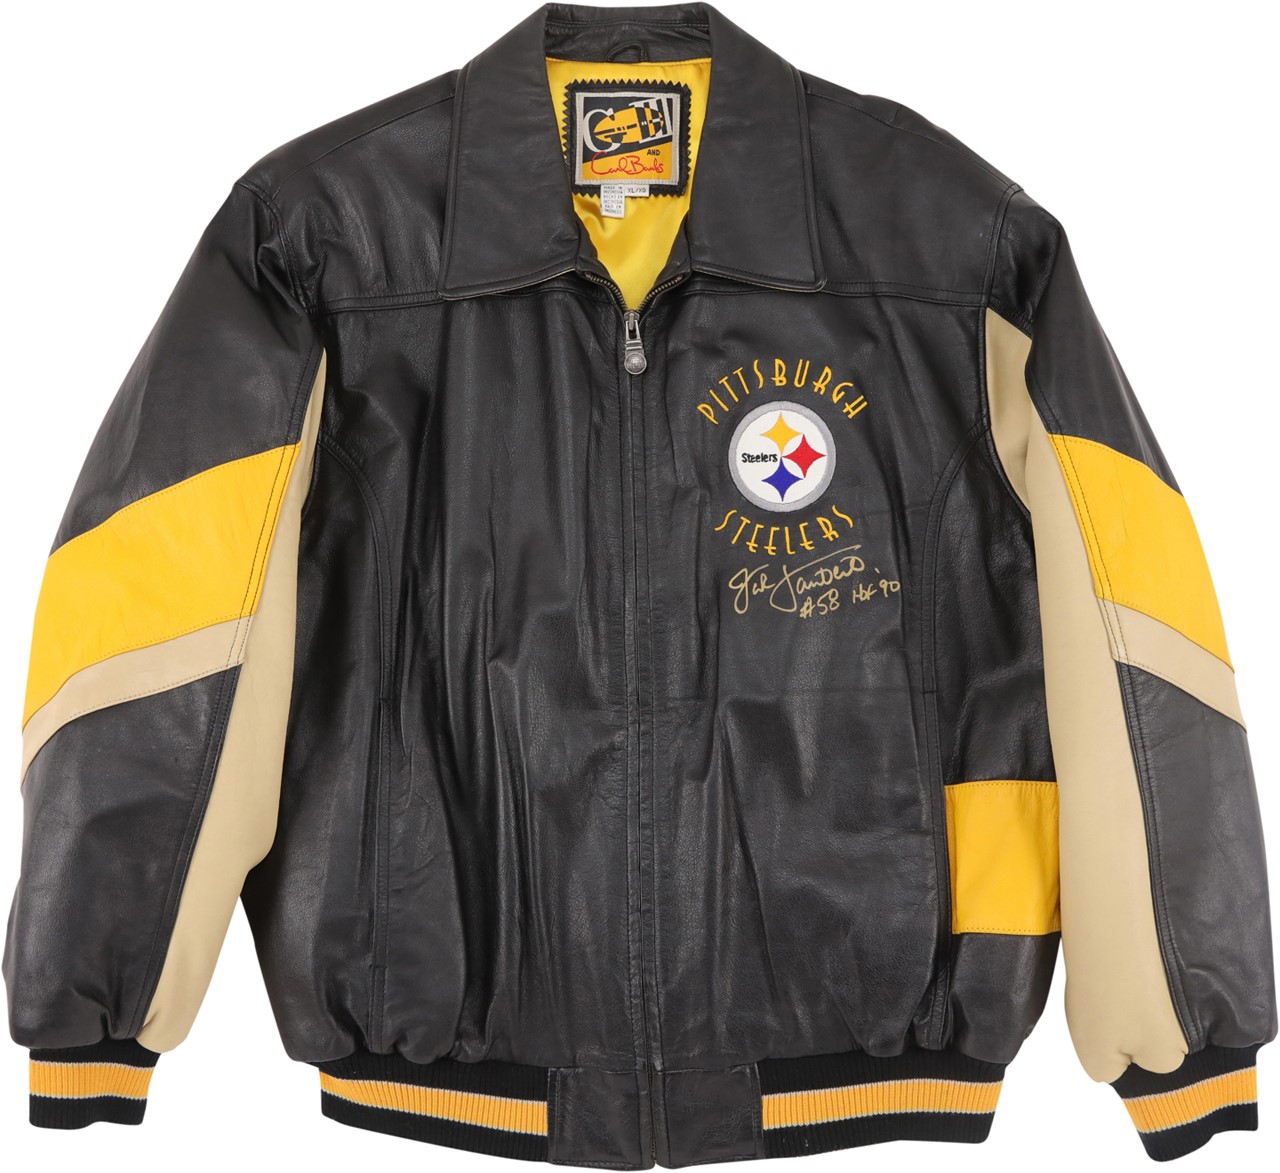 The Jack Lambert Collection - Jack Lambert Pittsburgh Steelers Leather Jacket